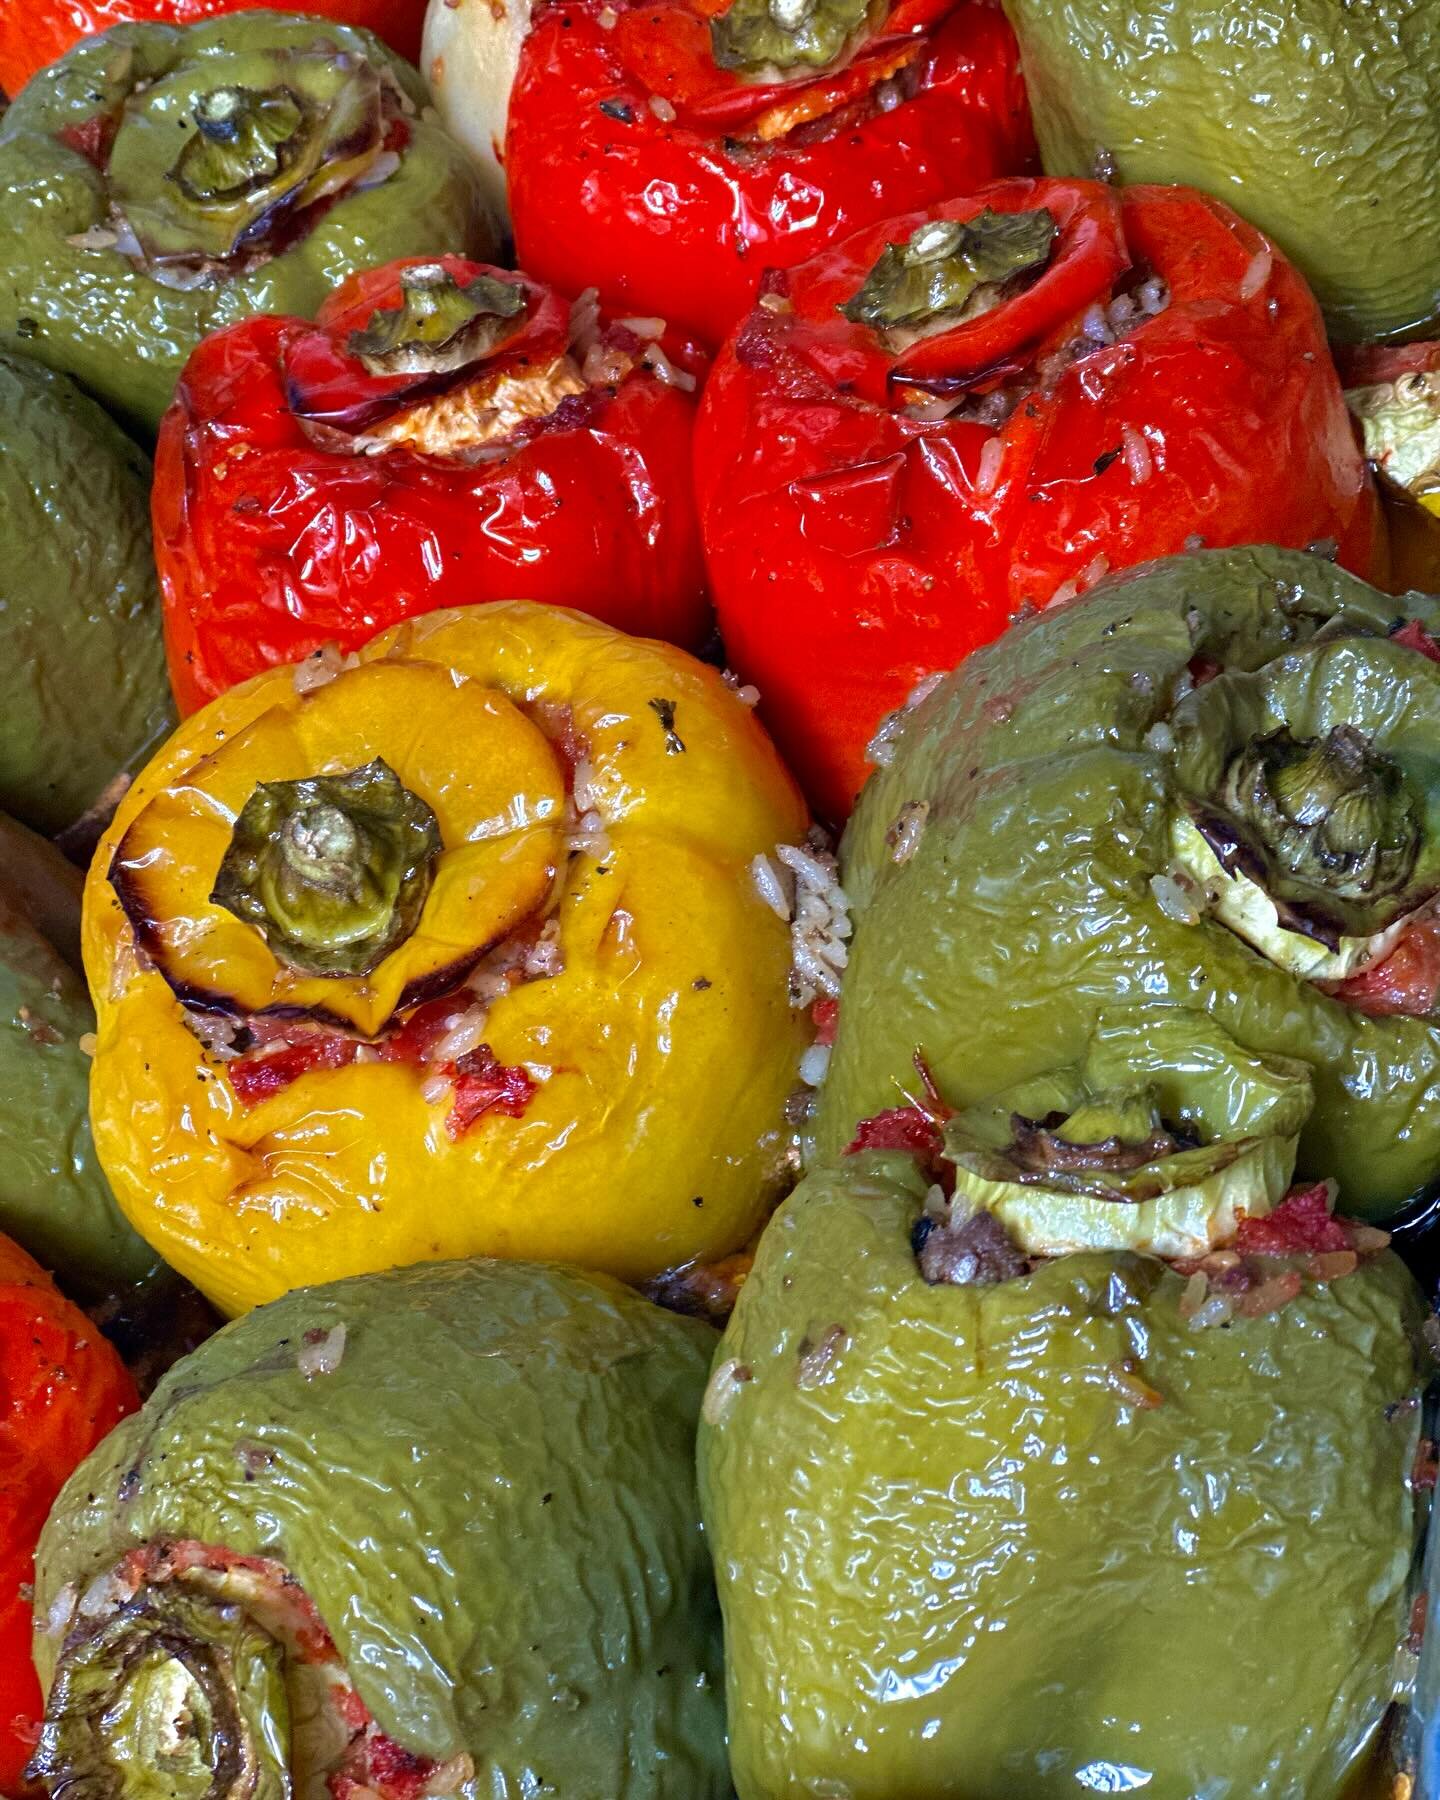 🔔Stuffed peppers 🫑🫑 and zucchini today 🤤 🚨
#stuffedpeppers #yemista #kephigreekkitchen